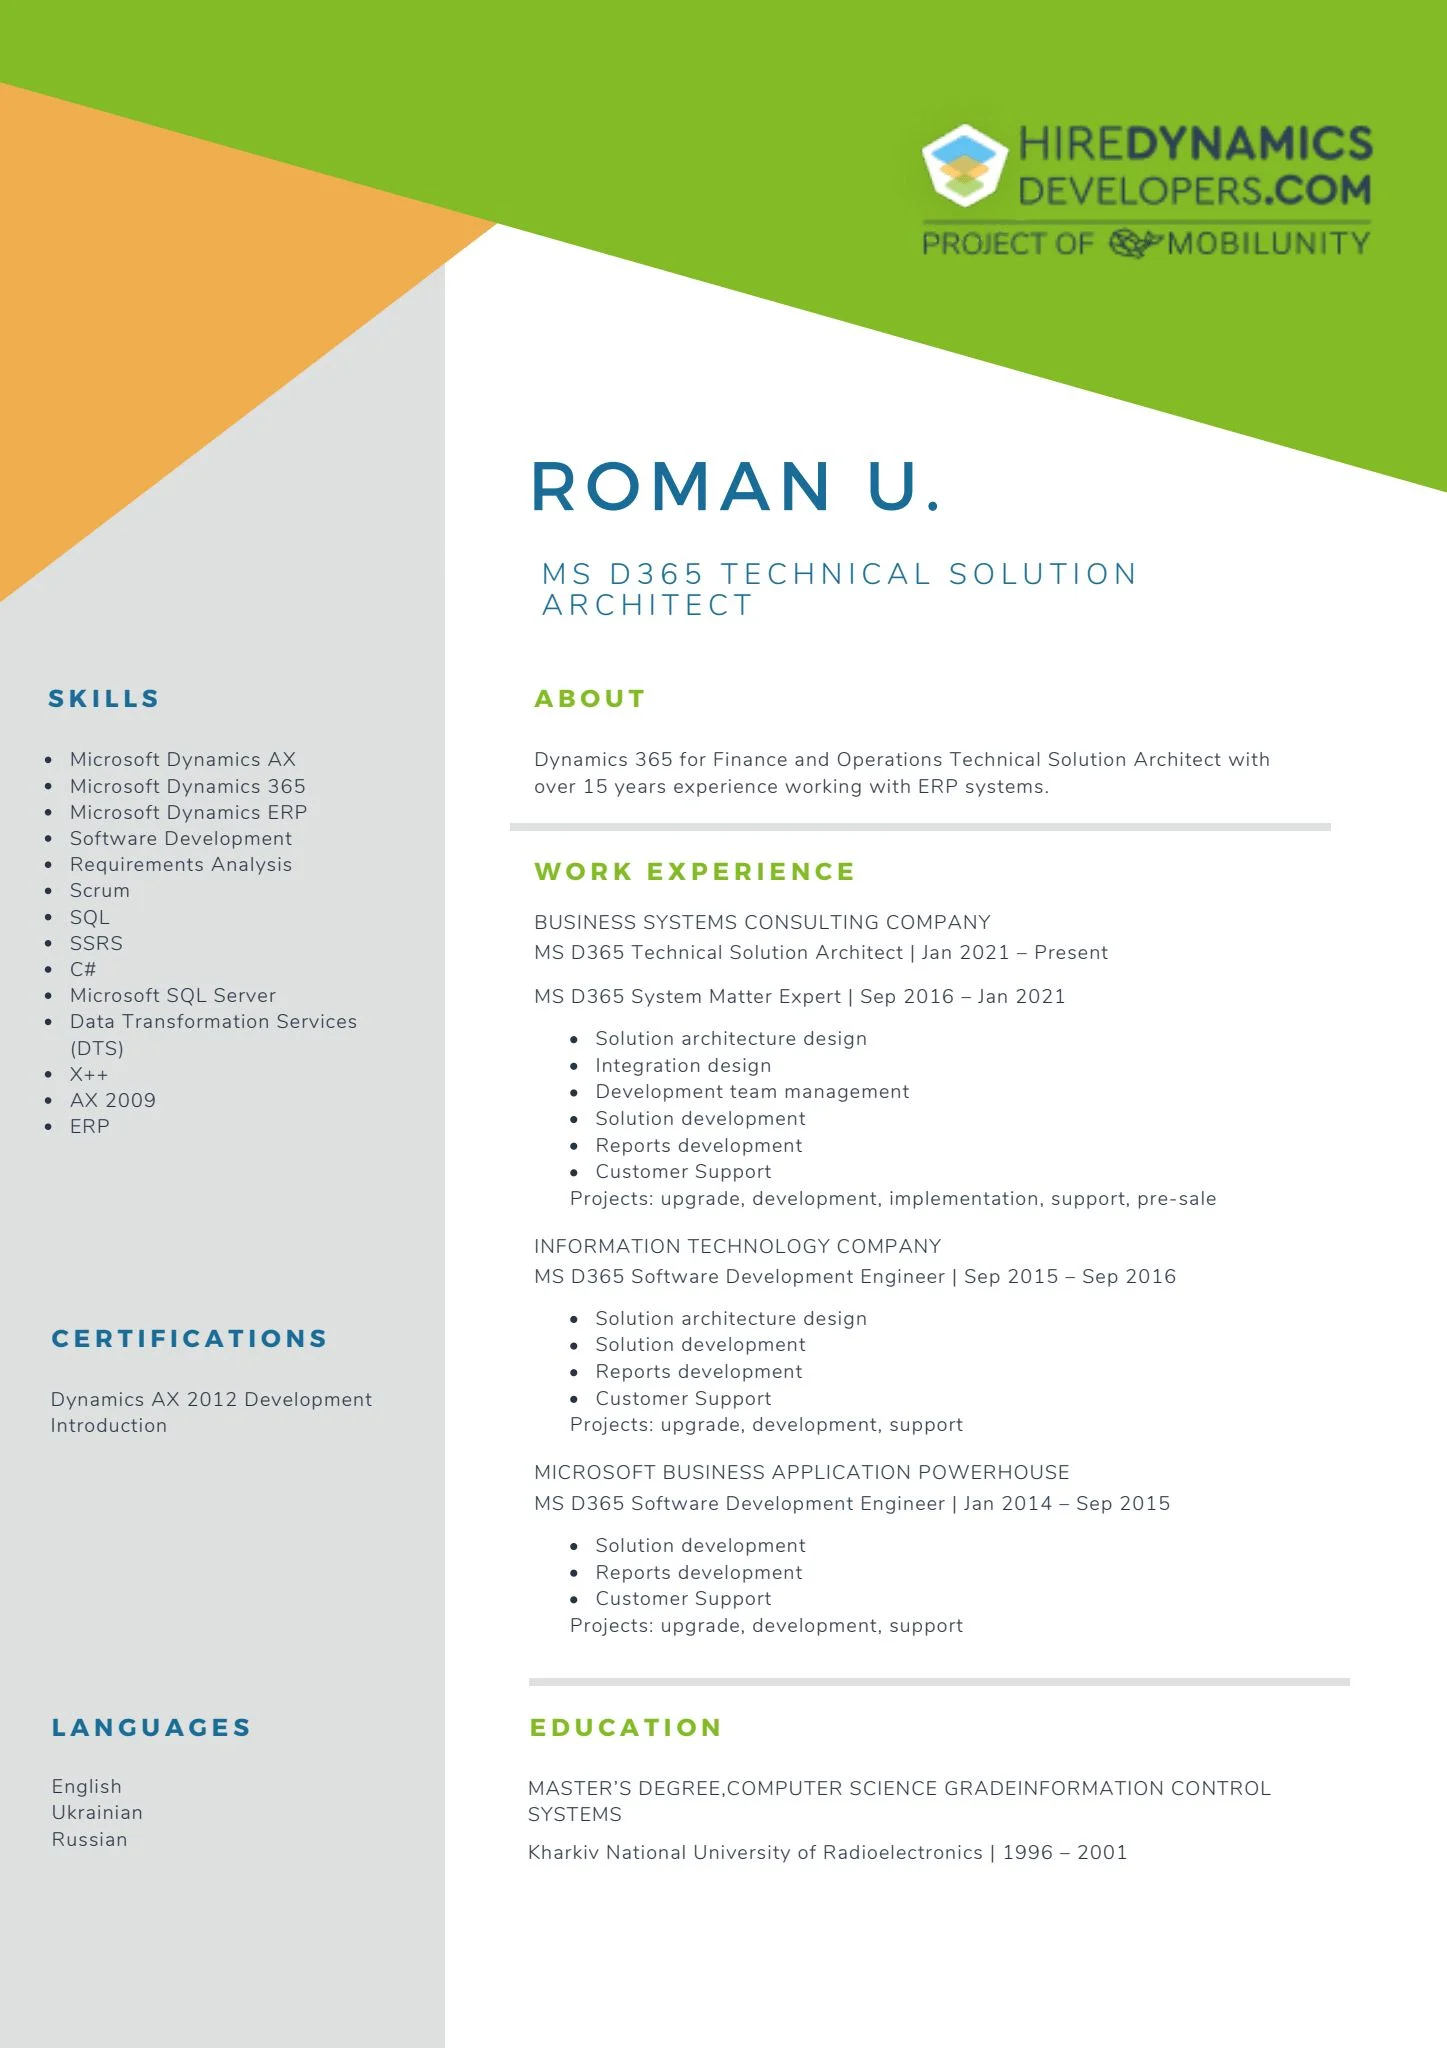 Roman U. – MS D365 Technical Solution Architect